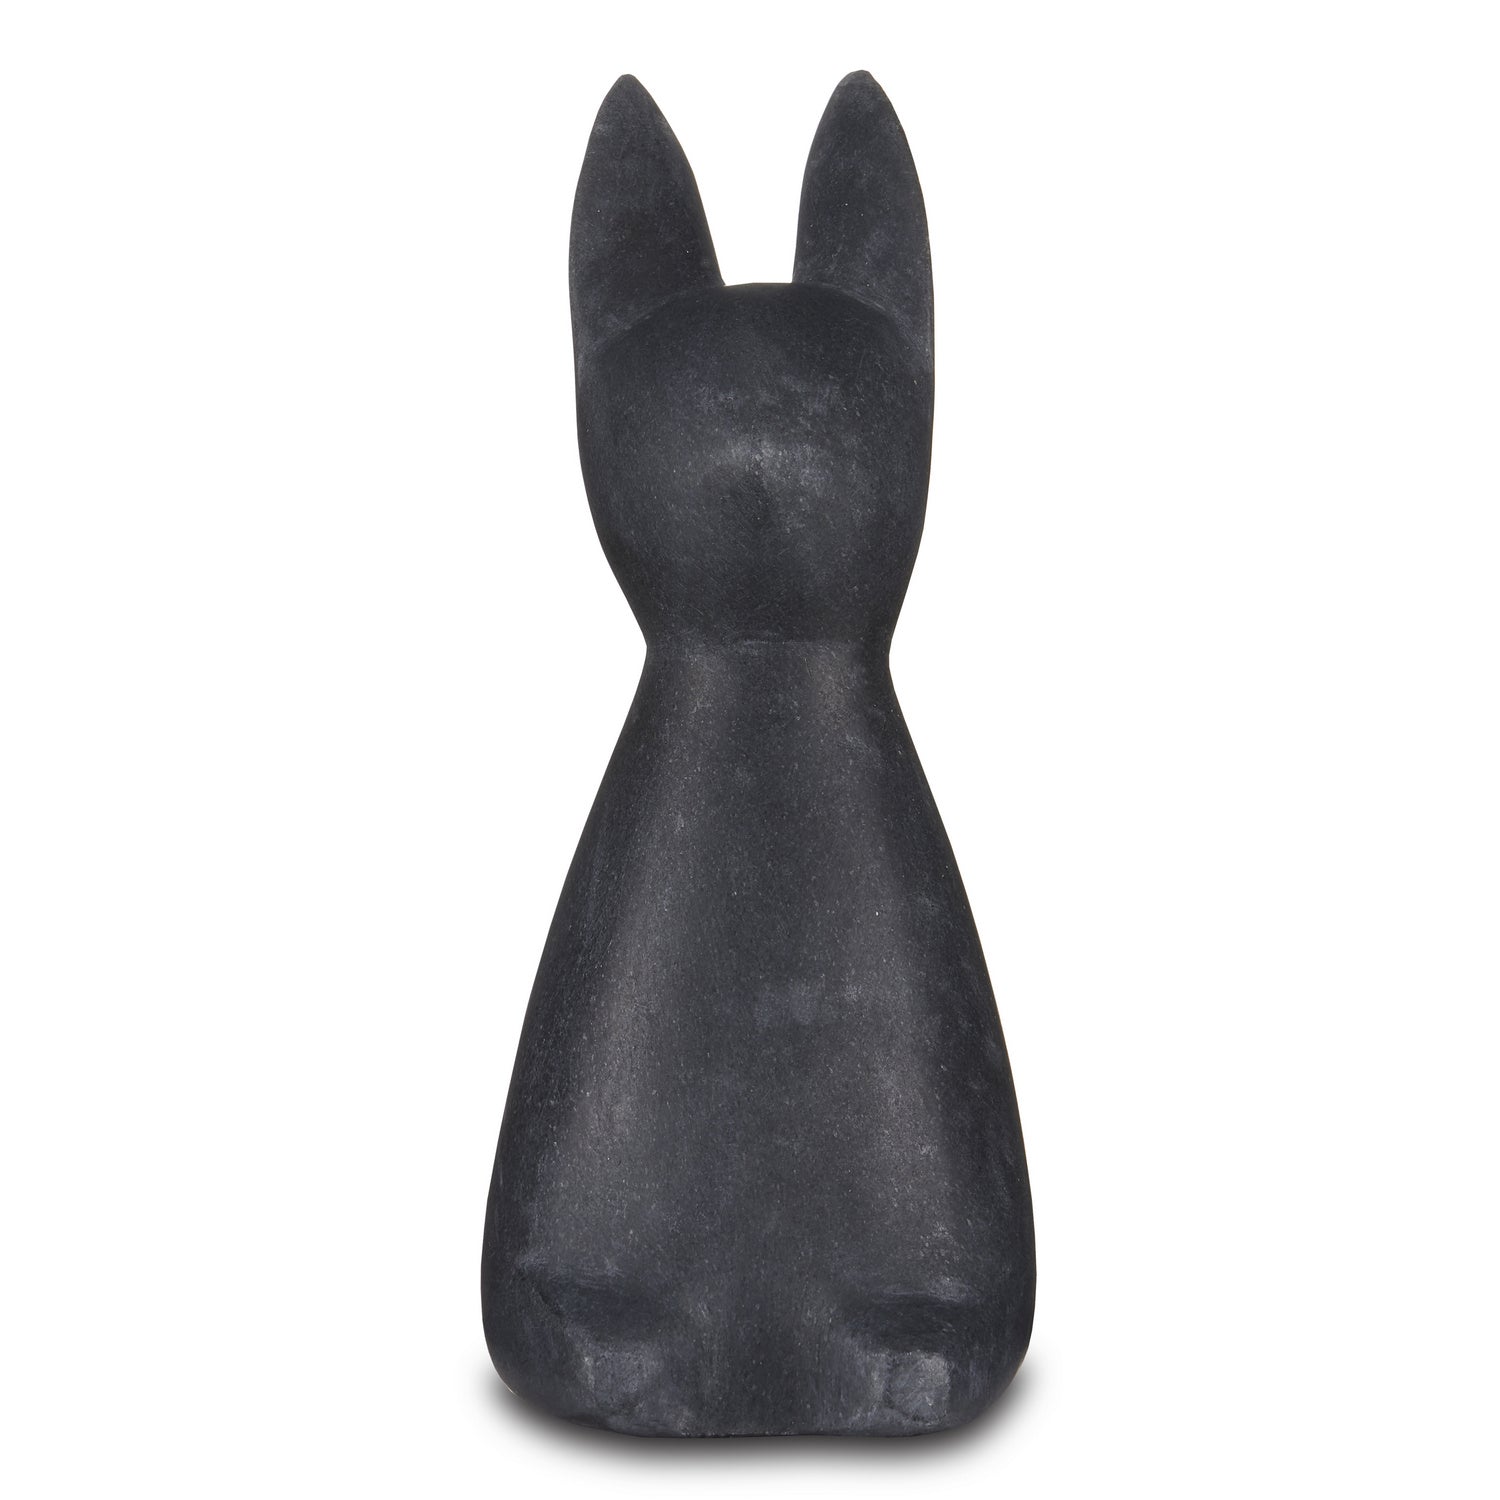 Rabbit in Black finish